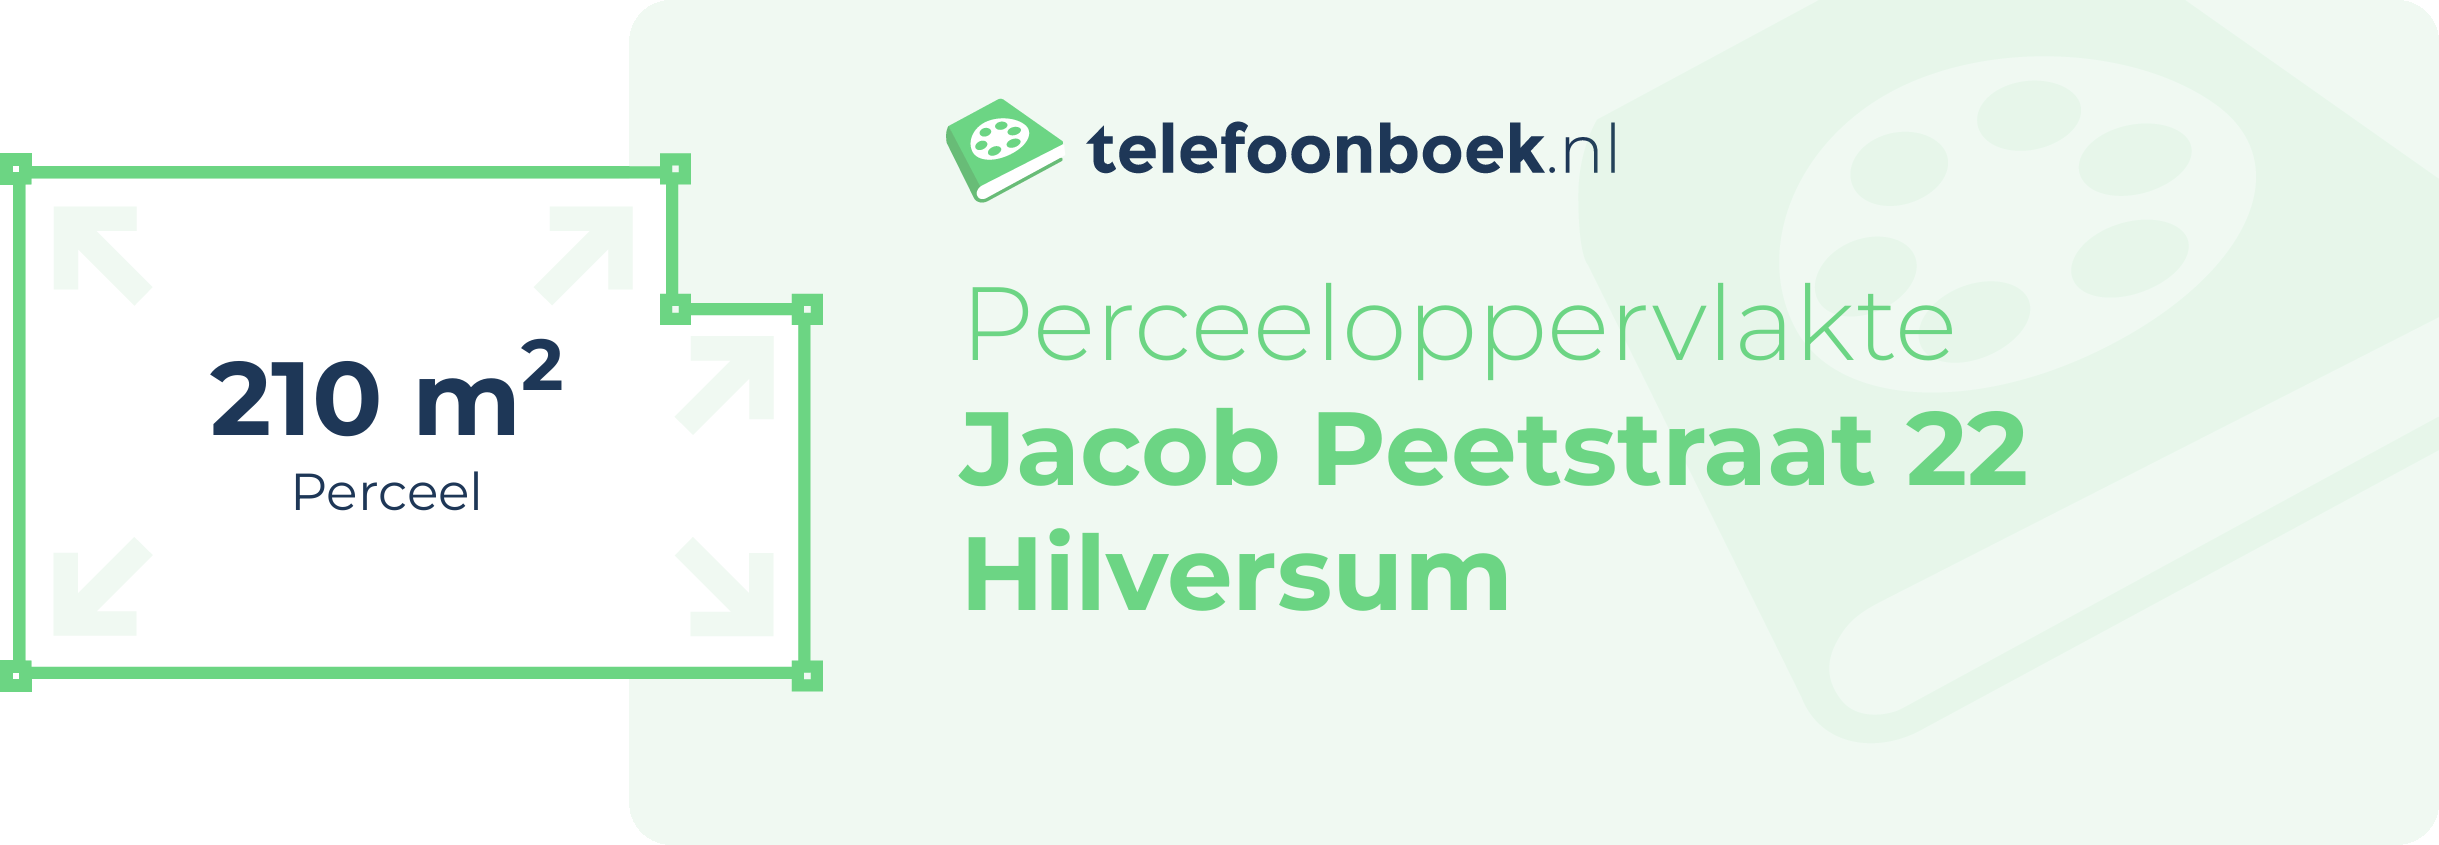 Perceeloppervlakte Jacob Peetstraat 22 Hilversum